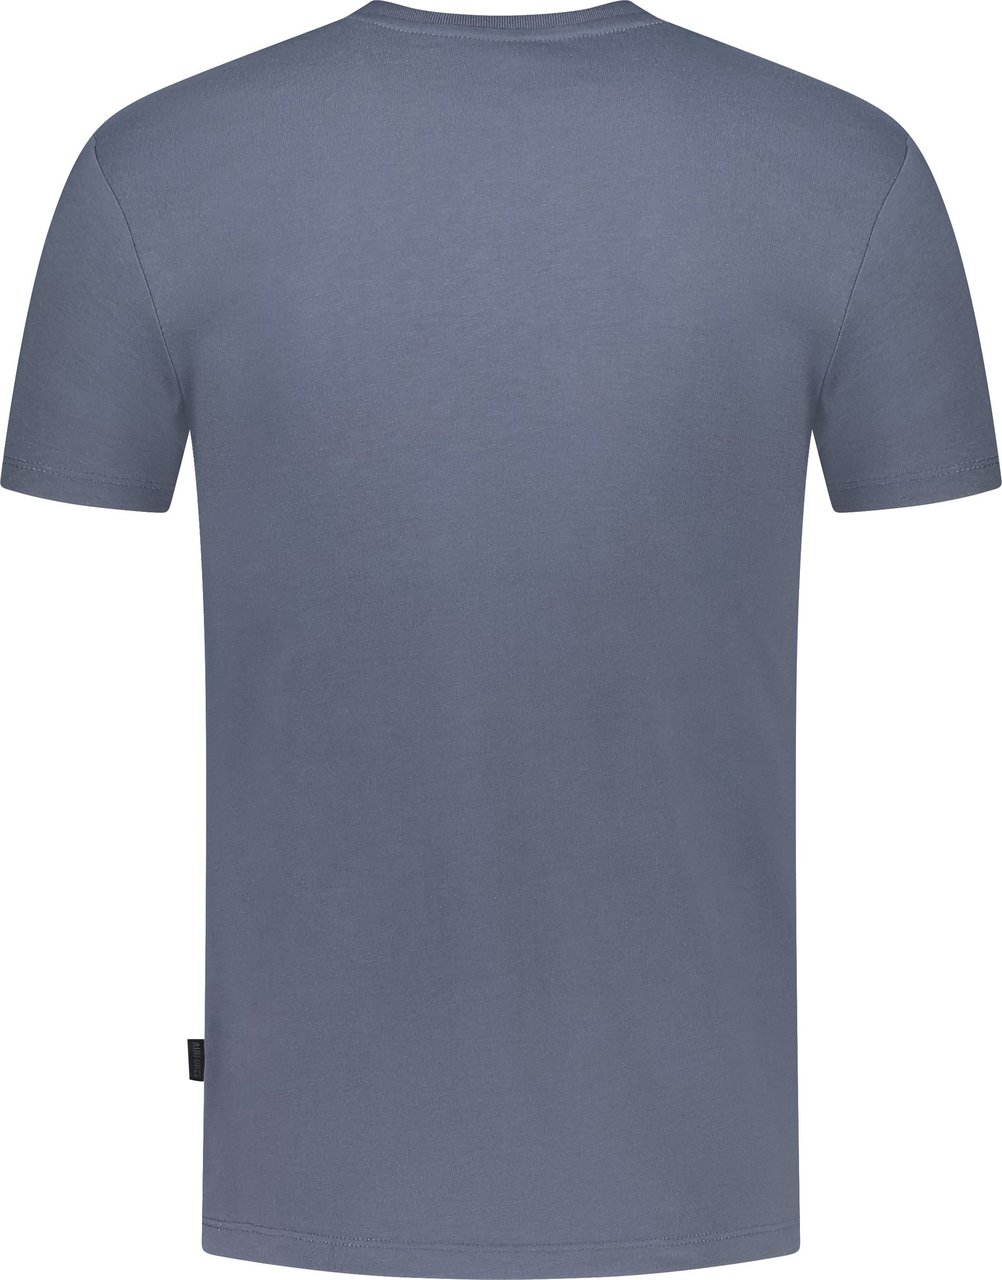 Airforce T-shirt Blauw Blauw